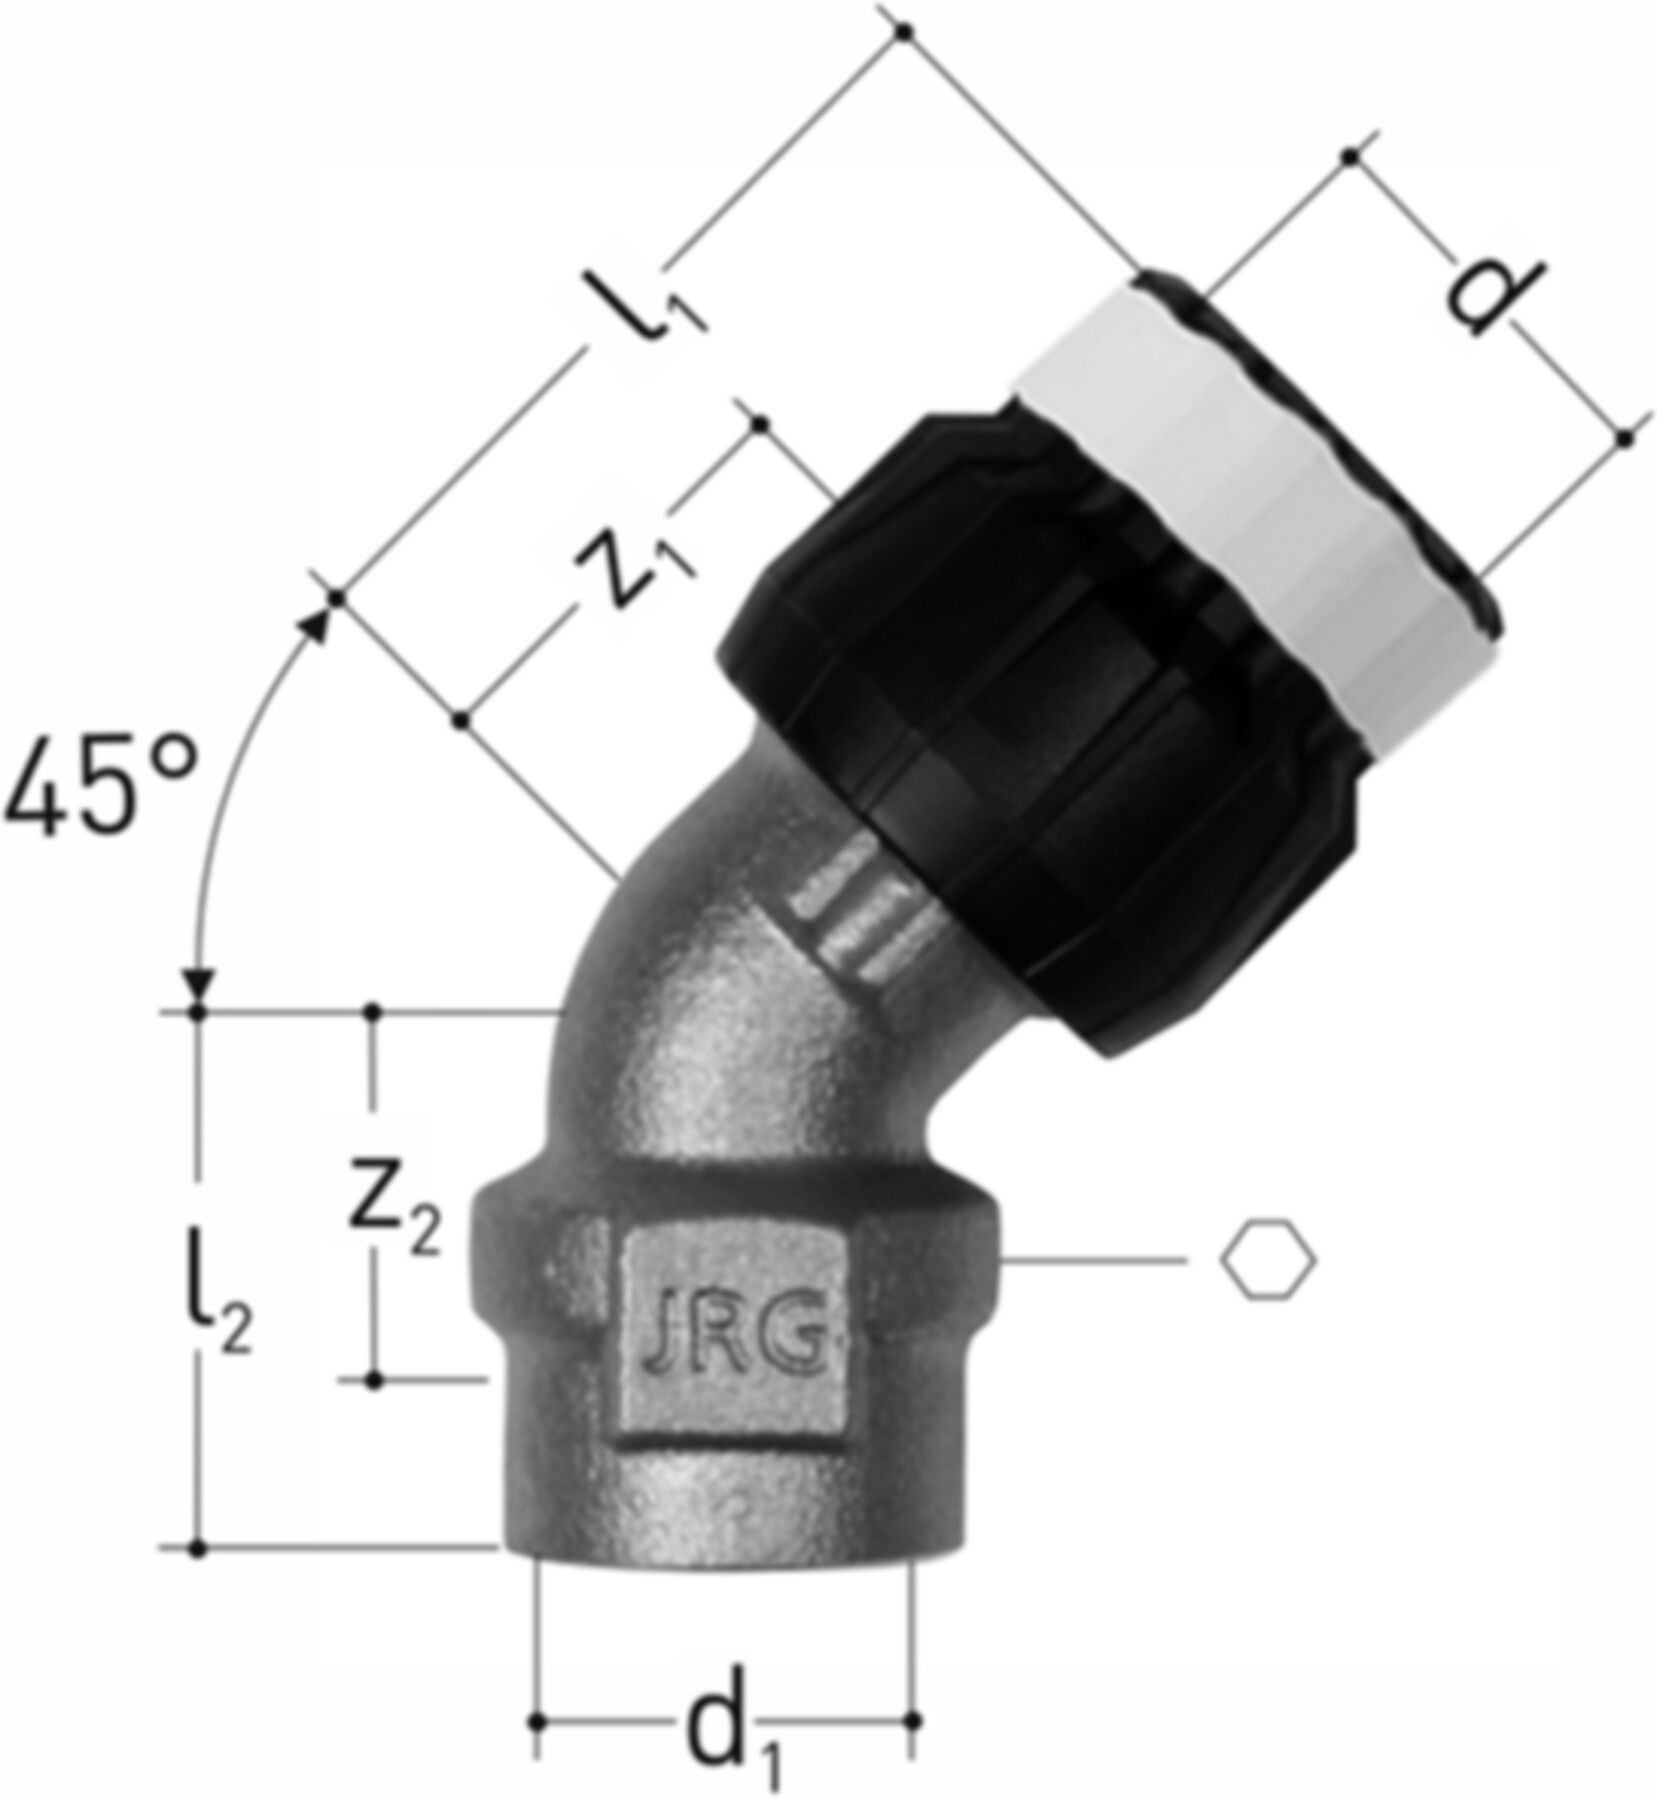 Winkel 45° mit IG 11/4"-40 4677.410 - JRG Sanipex-MT-Formstücke/Rohre in Stg.